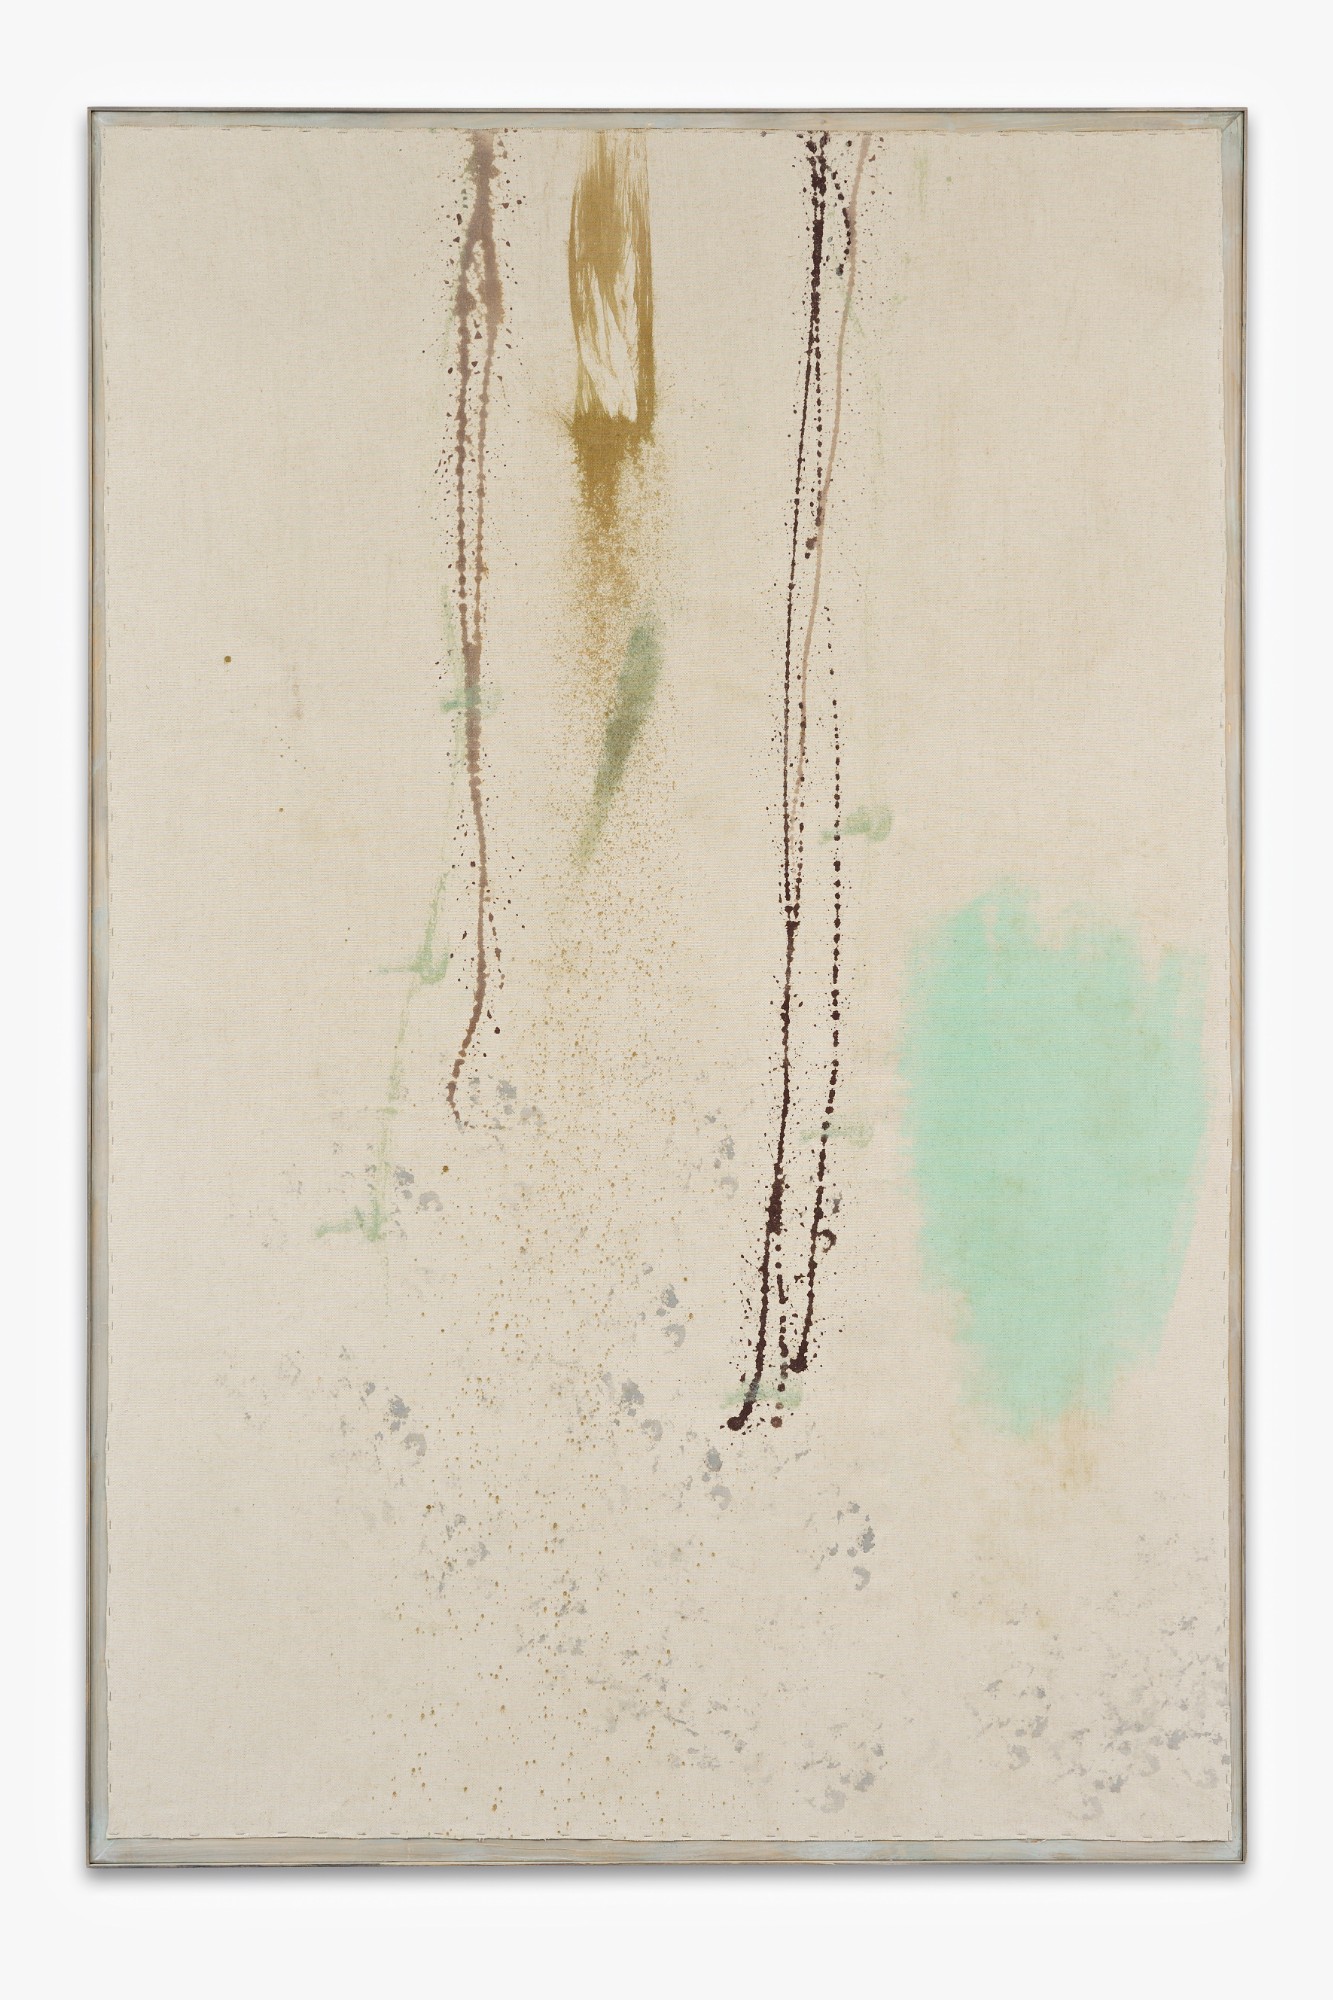 Erwin Gross, Fockea, 2012, acrylic, pigment on cotton, 215 x 143 cm